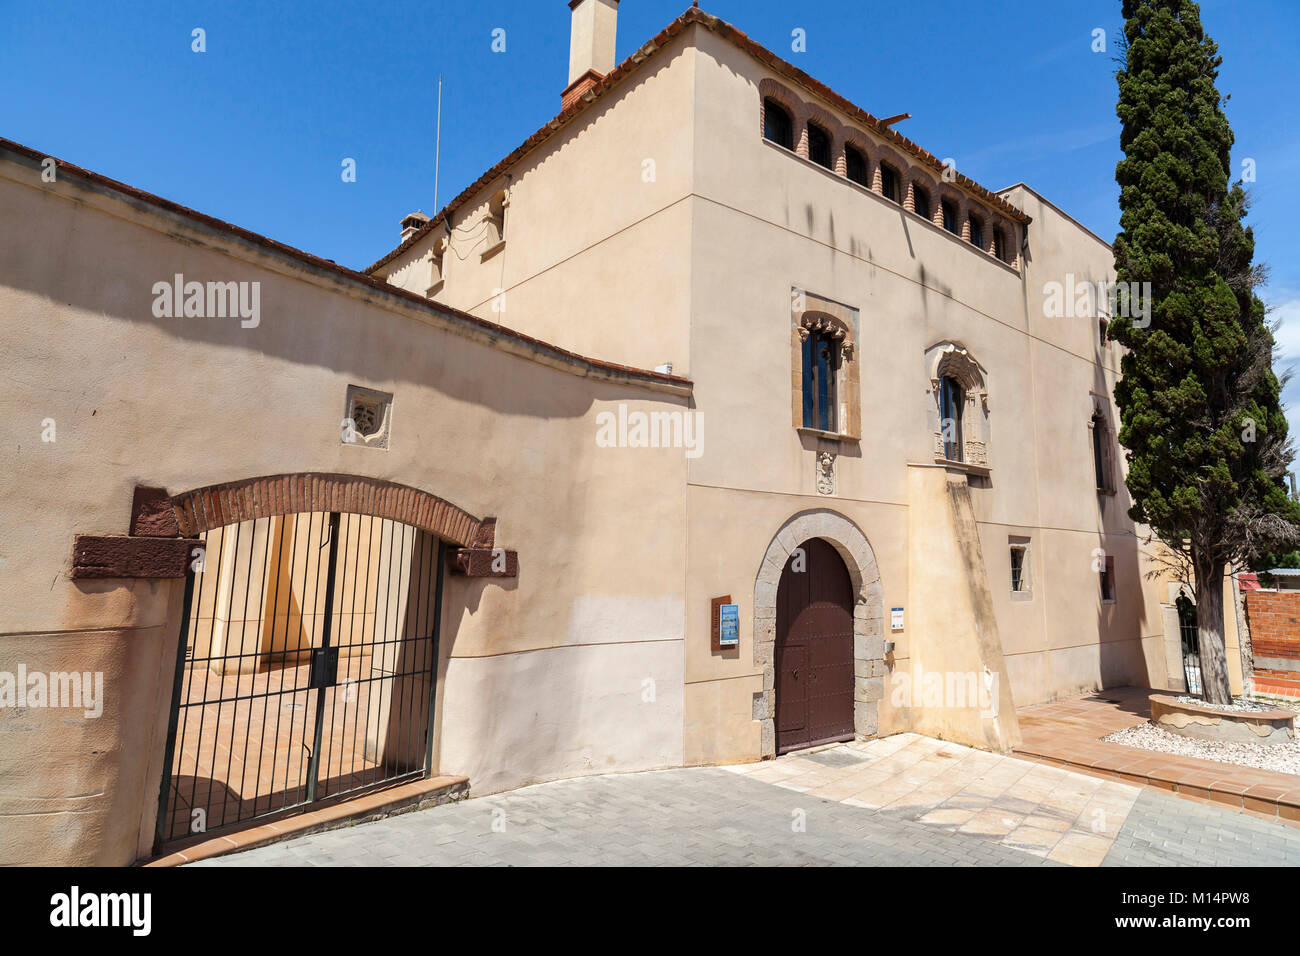 Antico borgo medioevale Manor House può torrent.Sant Boi de Llobregat,Catalogna,Spagna. Foto Stock